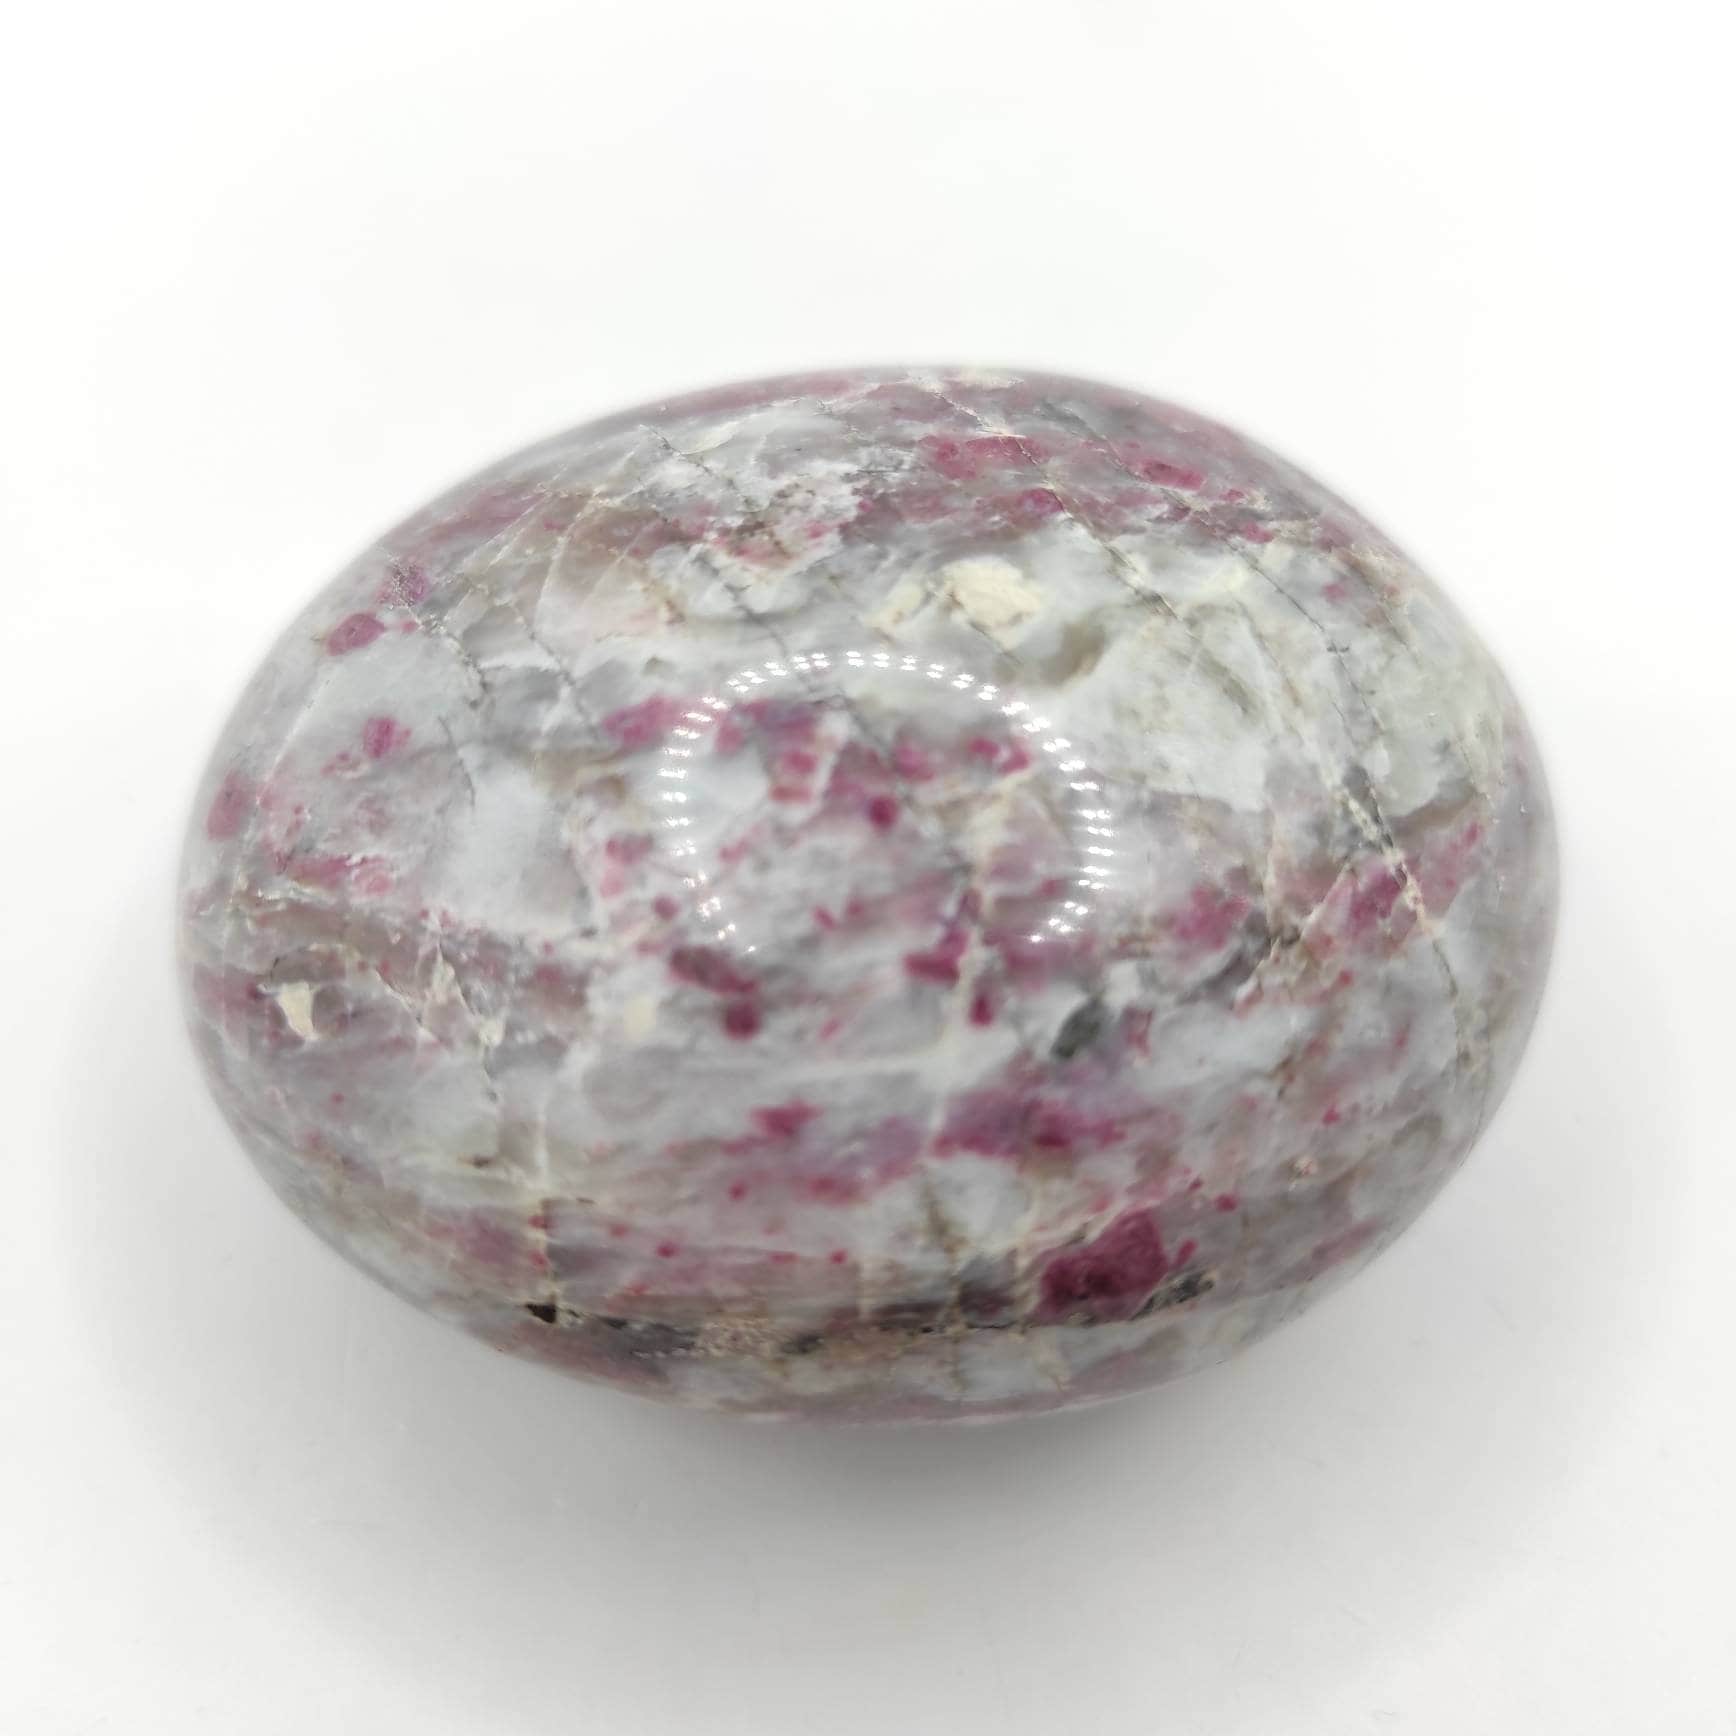 168g Rubellite Tourmaline Palm Stone Polished Pink Tourmaline Brazil Rubellite Natural Tourmaline Red Tourmaline Polished Mineral Specimen